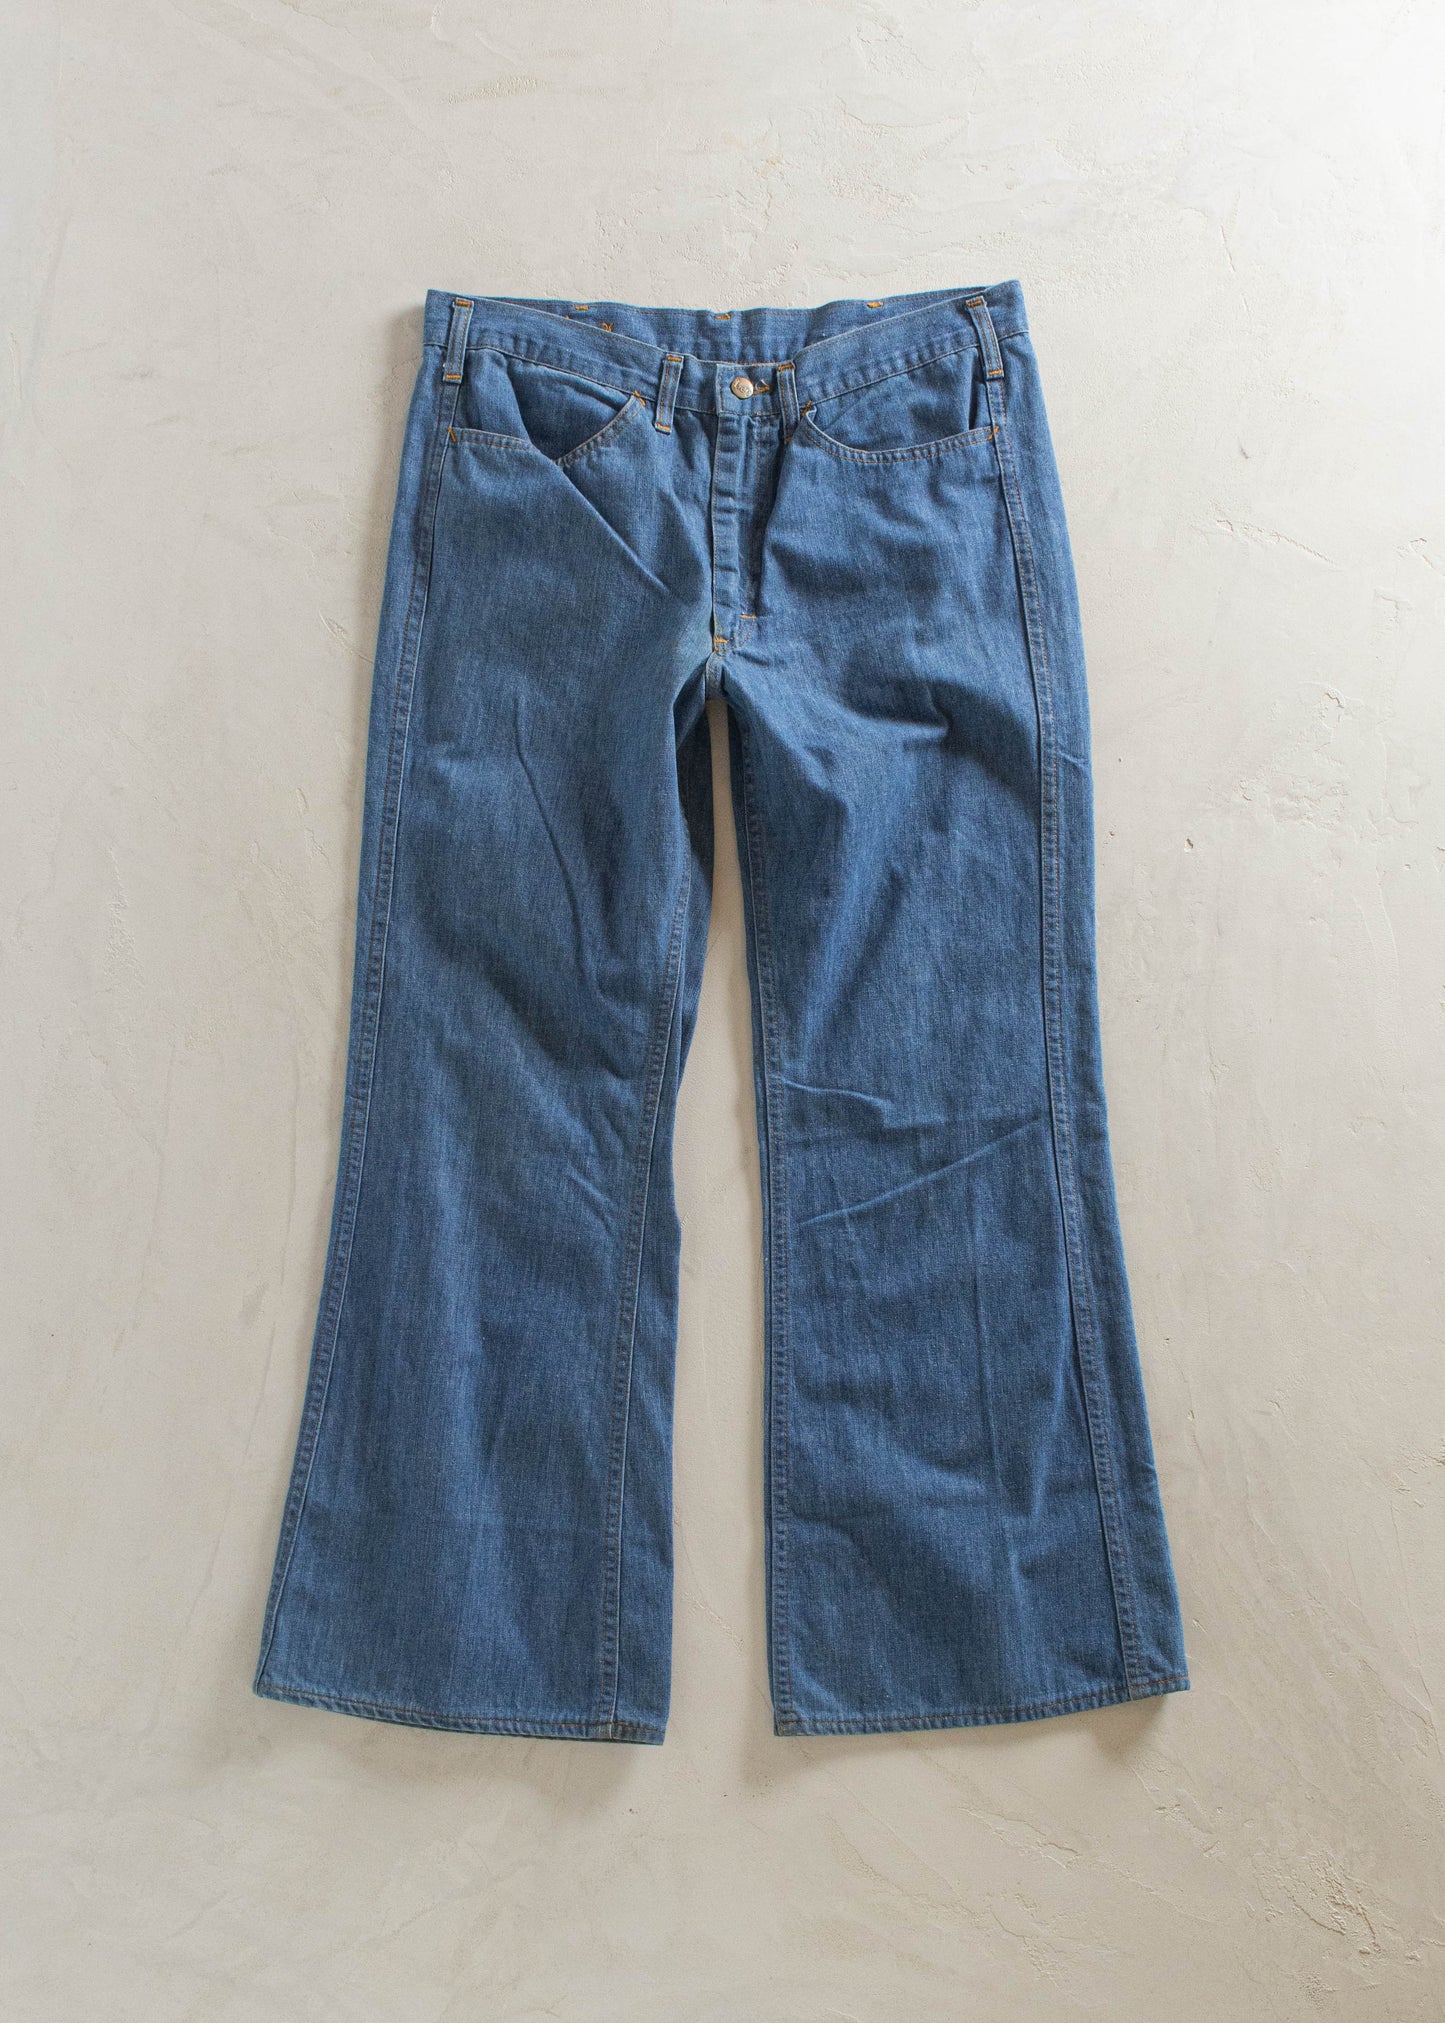 1980s Lee Darkwash Flare Jeans Size Women's 32 Men's 34